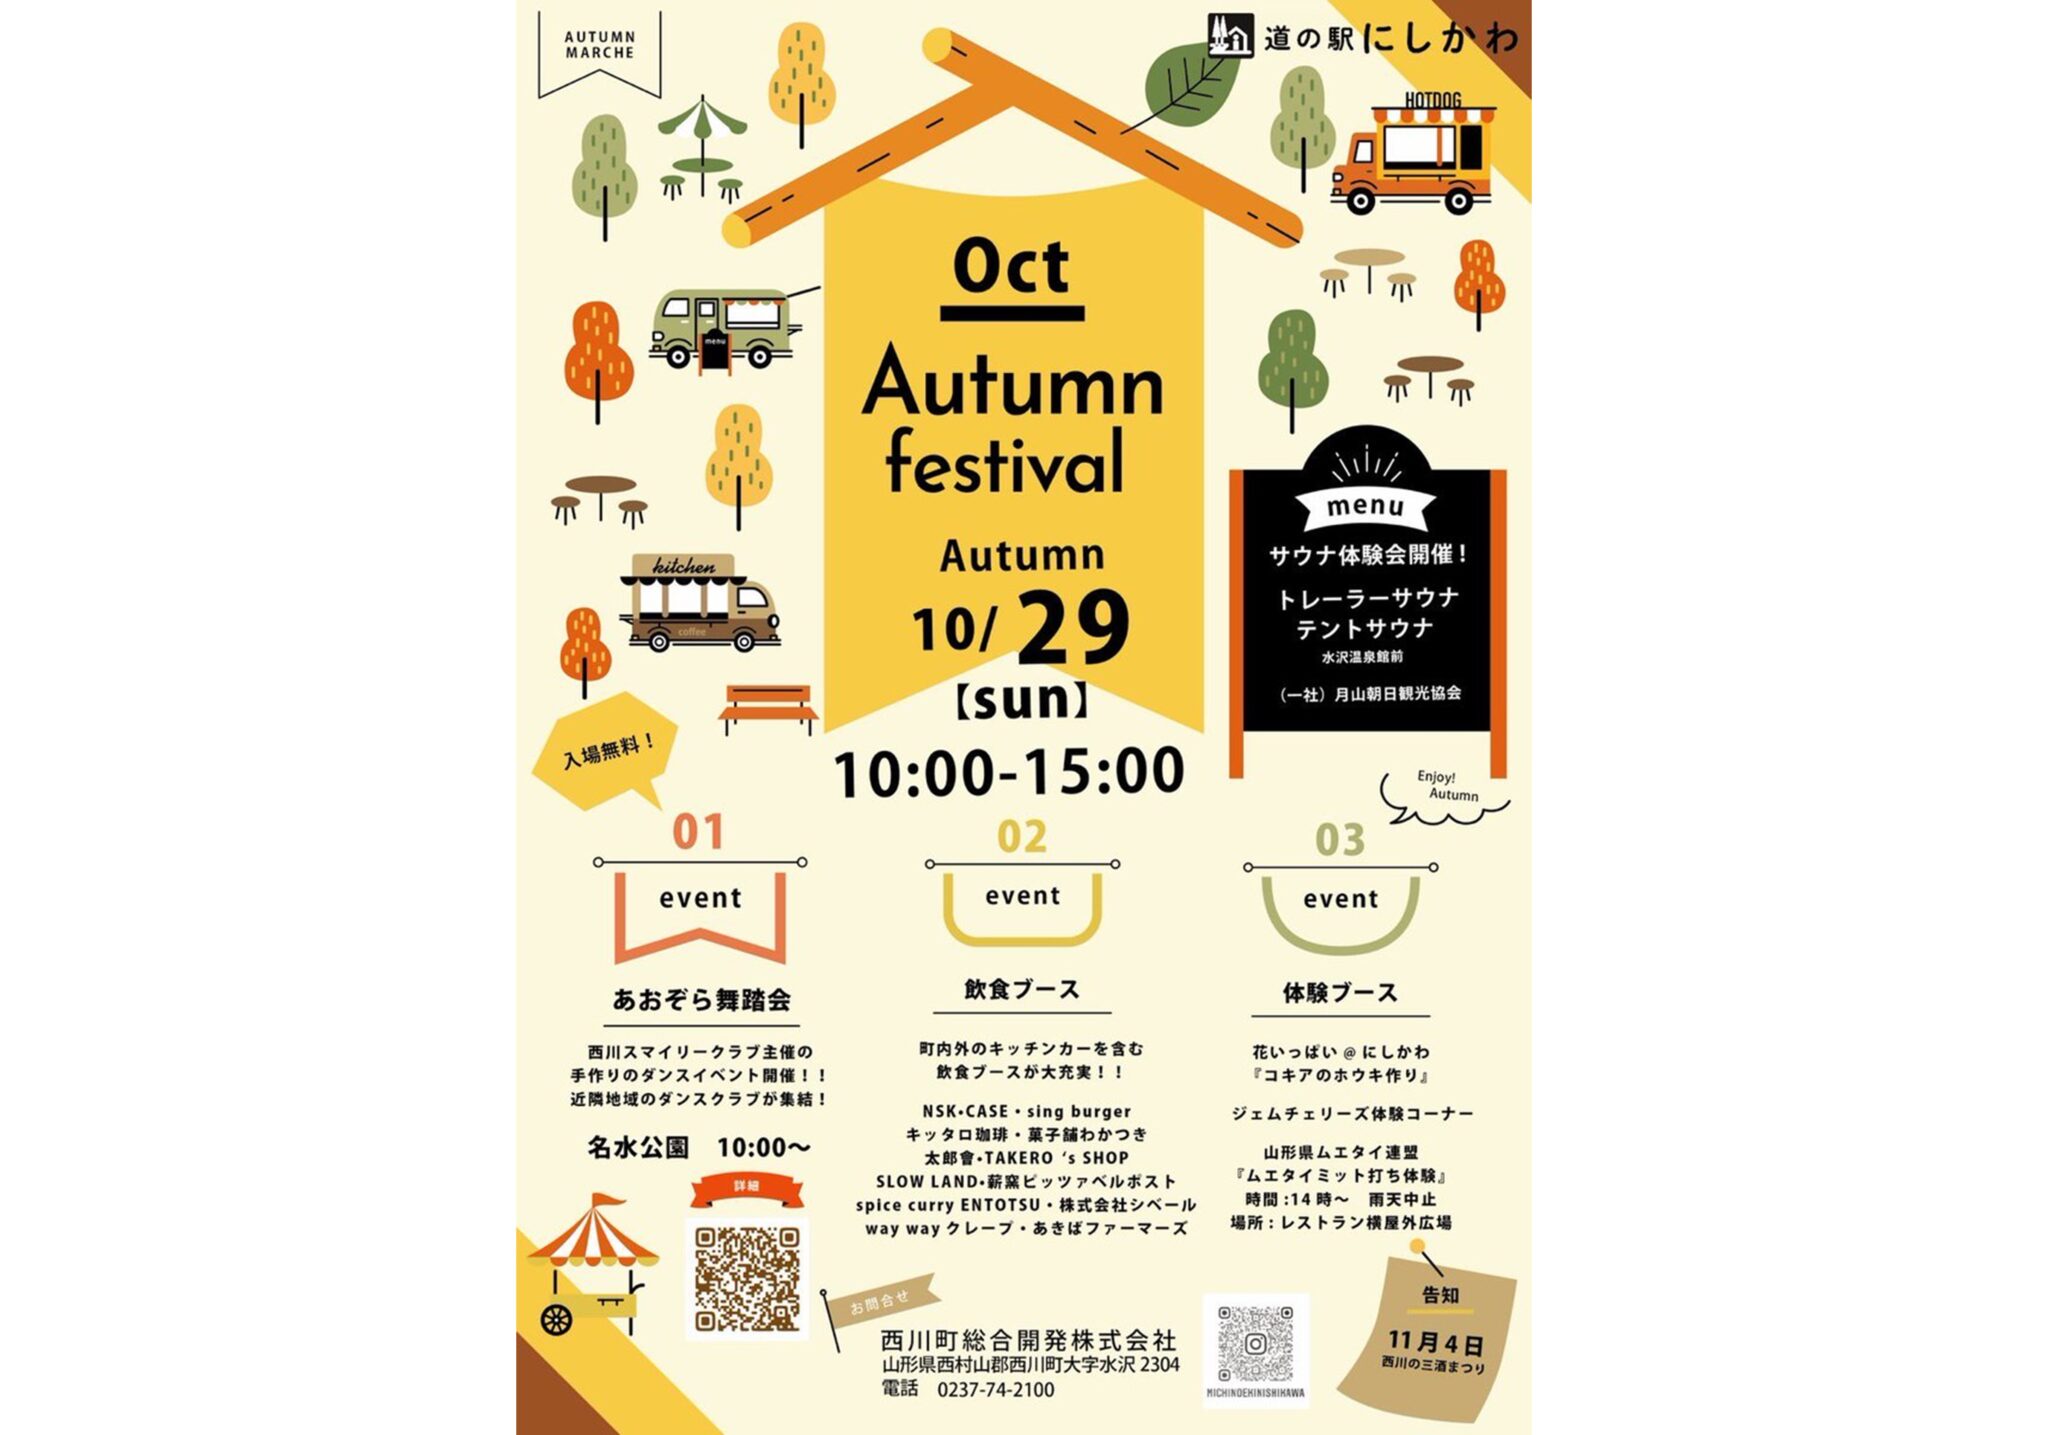 Roadside Station Nishikawa Autumn Festival